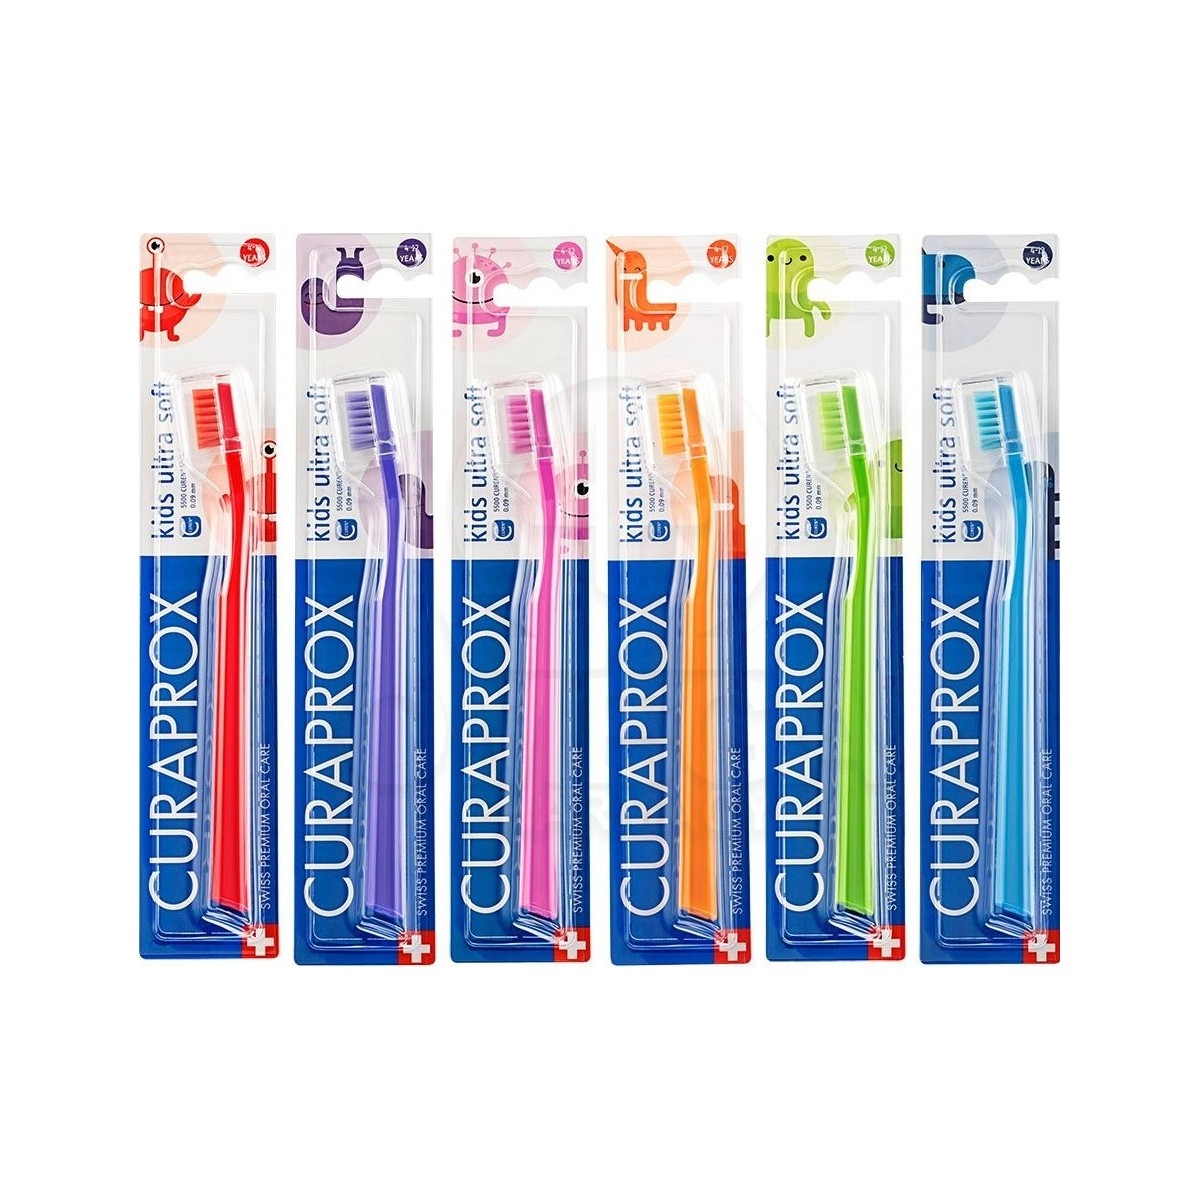 CURAPROX Kids Toothbrush Ultra Soft Πολύ Μαλακή Οδοντόβουρτσα για Παιδιά  4-12 Ετών σε Διάφορα Χρώματα 1τμχ